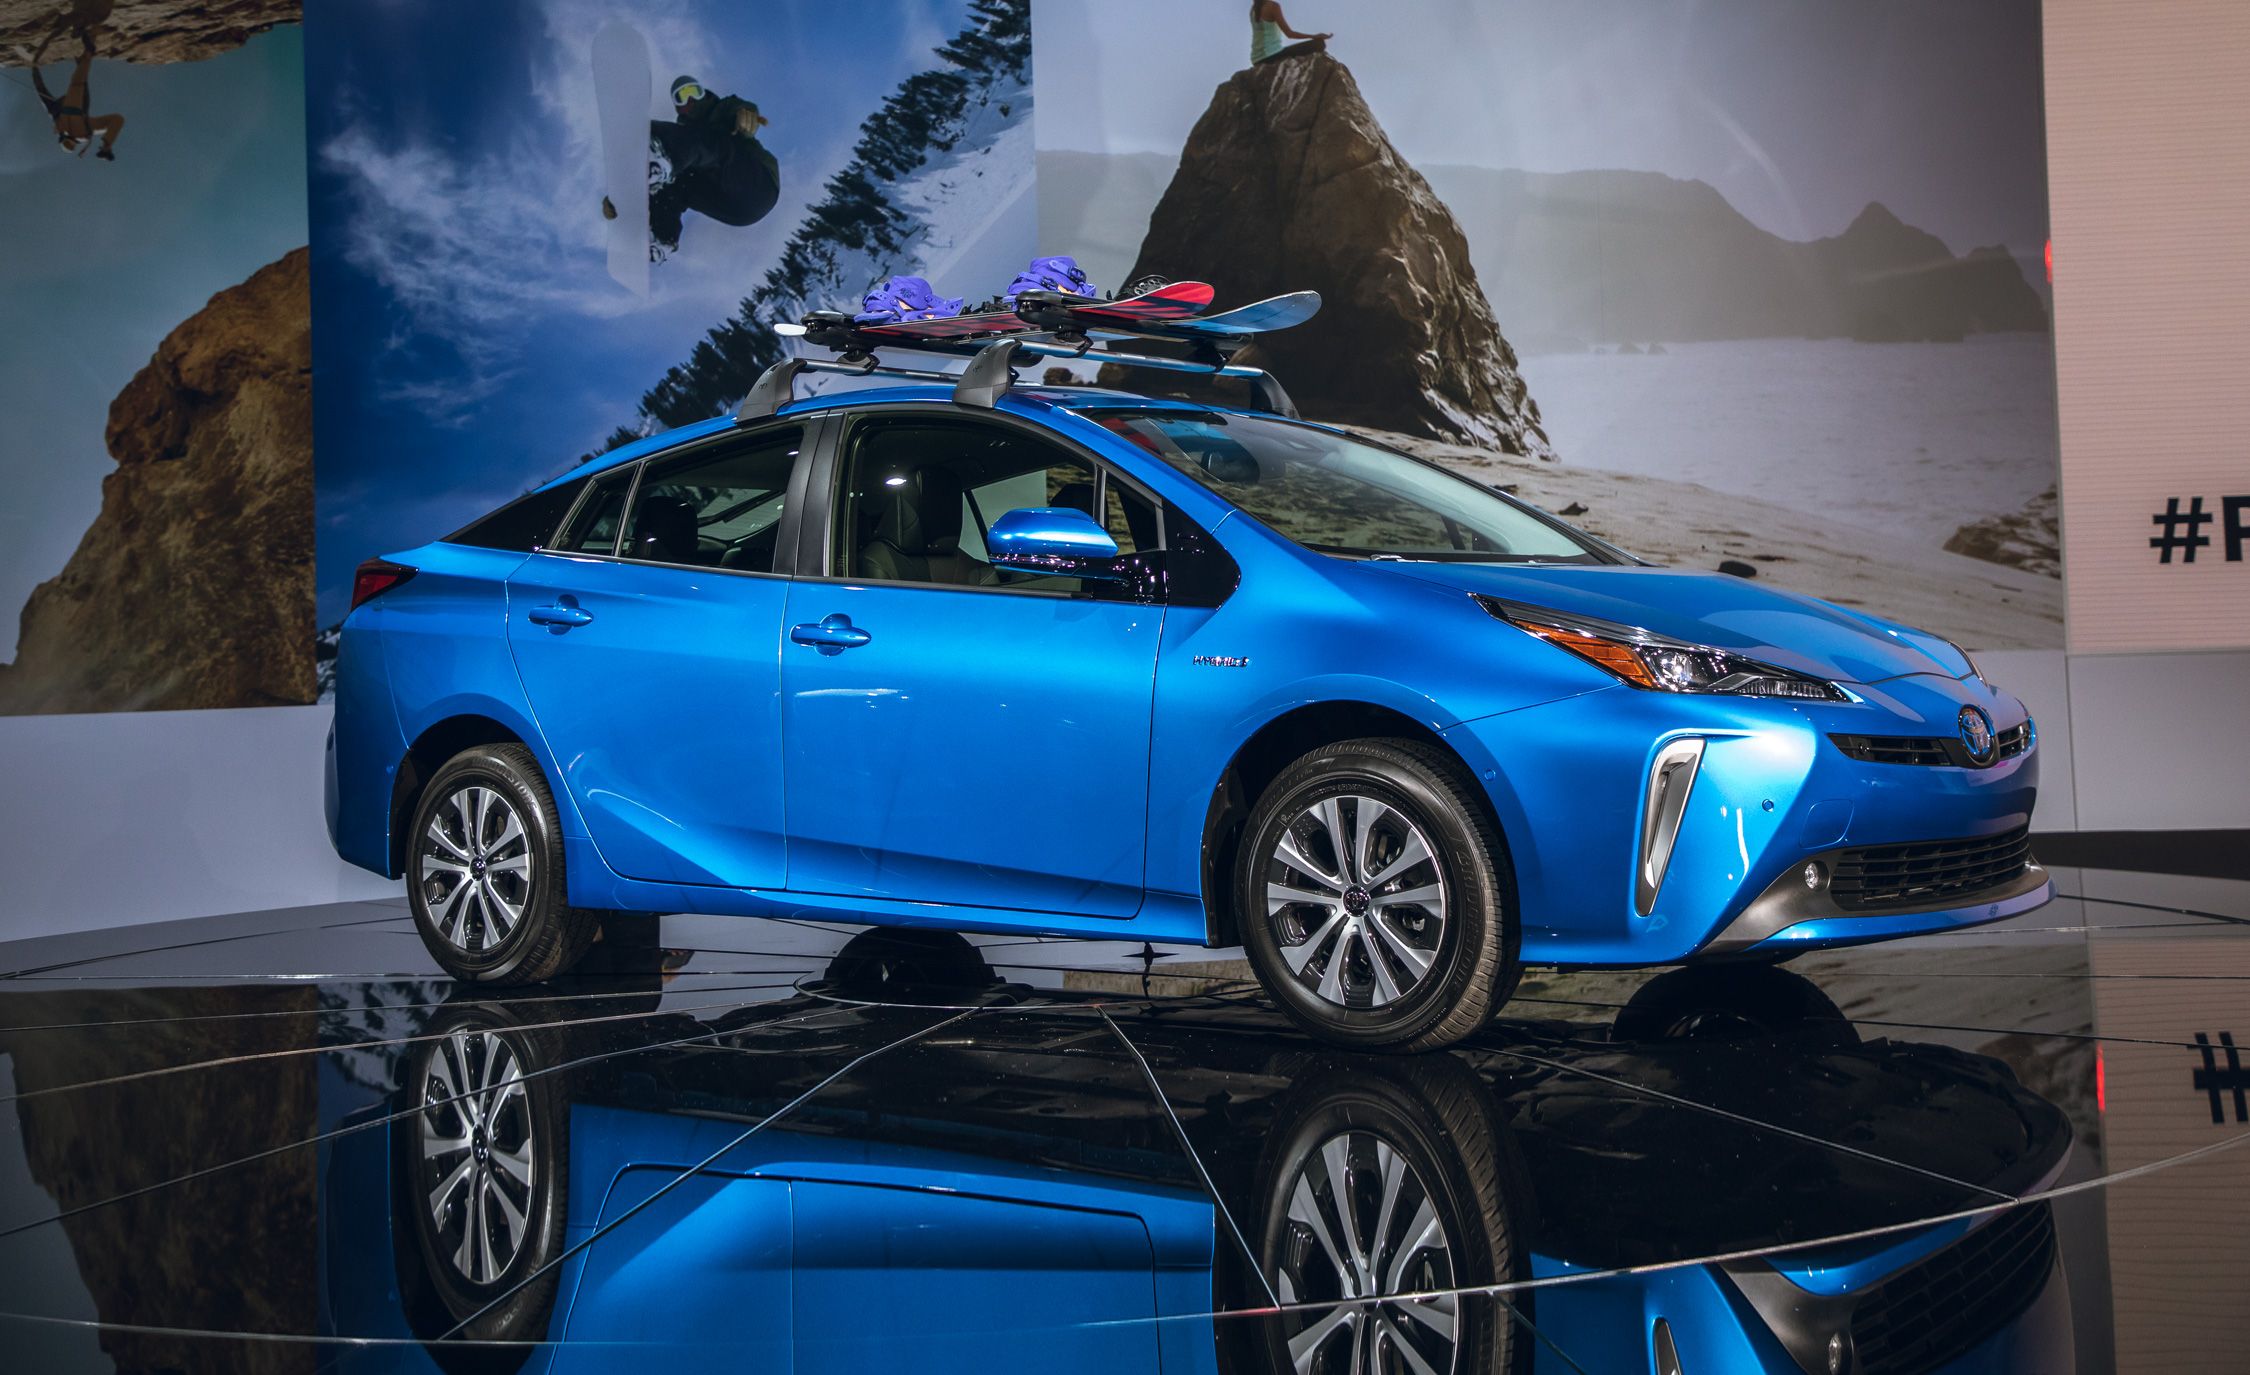 2019 Toyota Prius Hybrid - Now Has Optional All-Wheel Drive